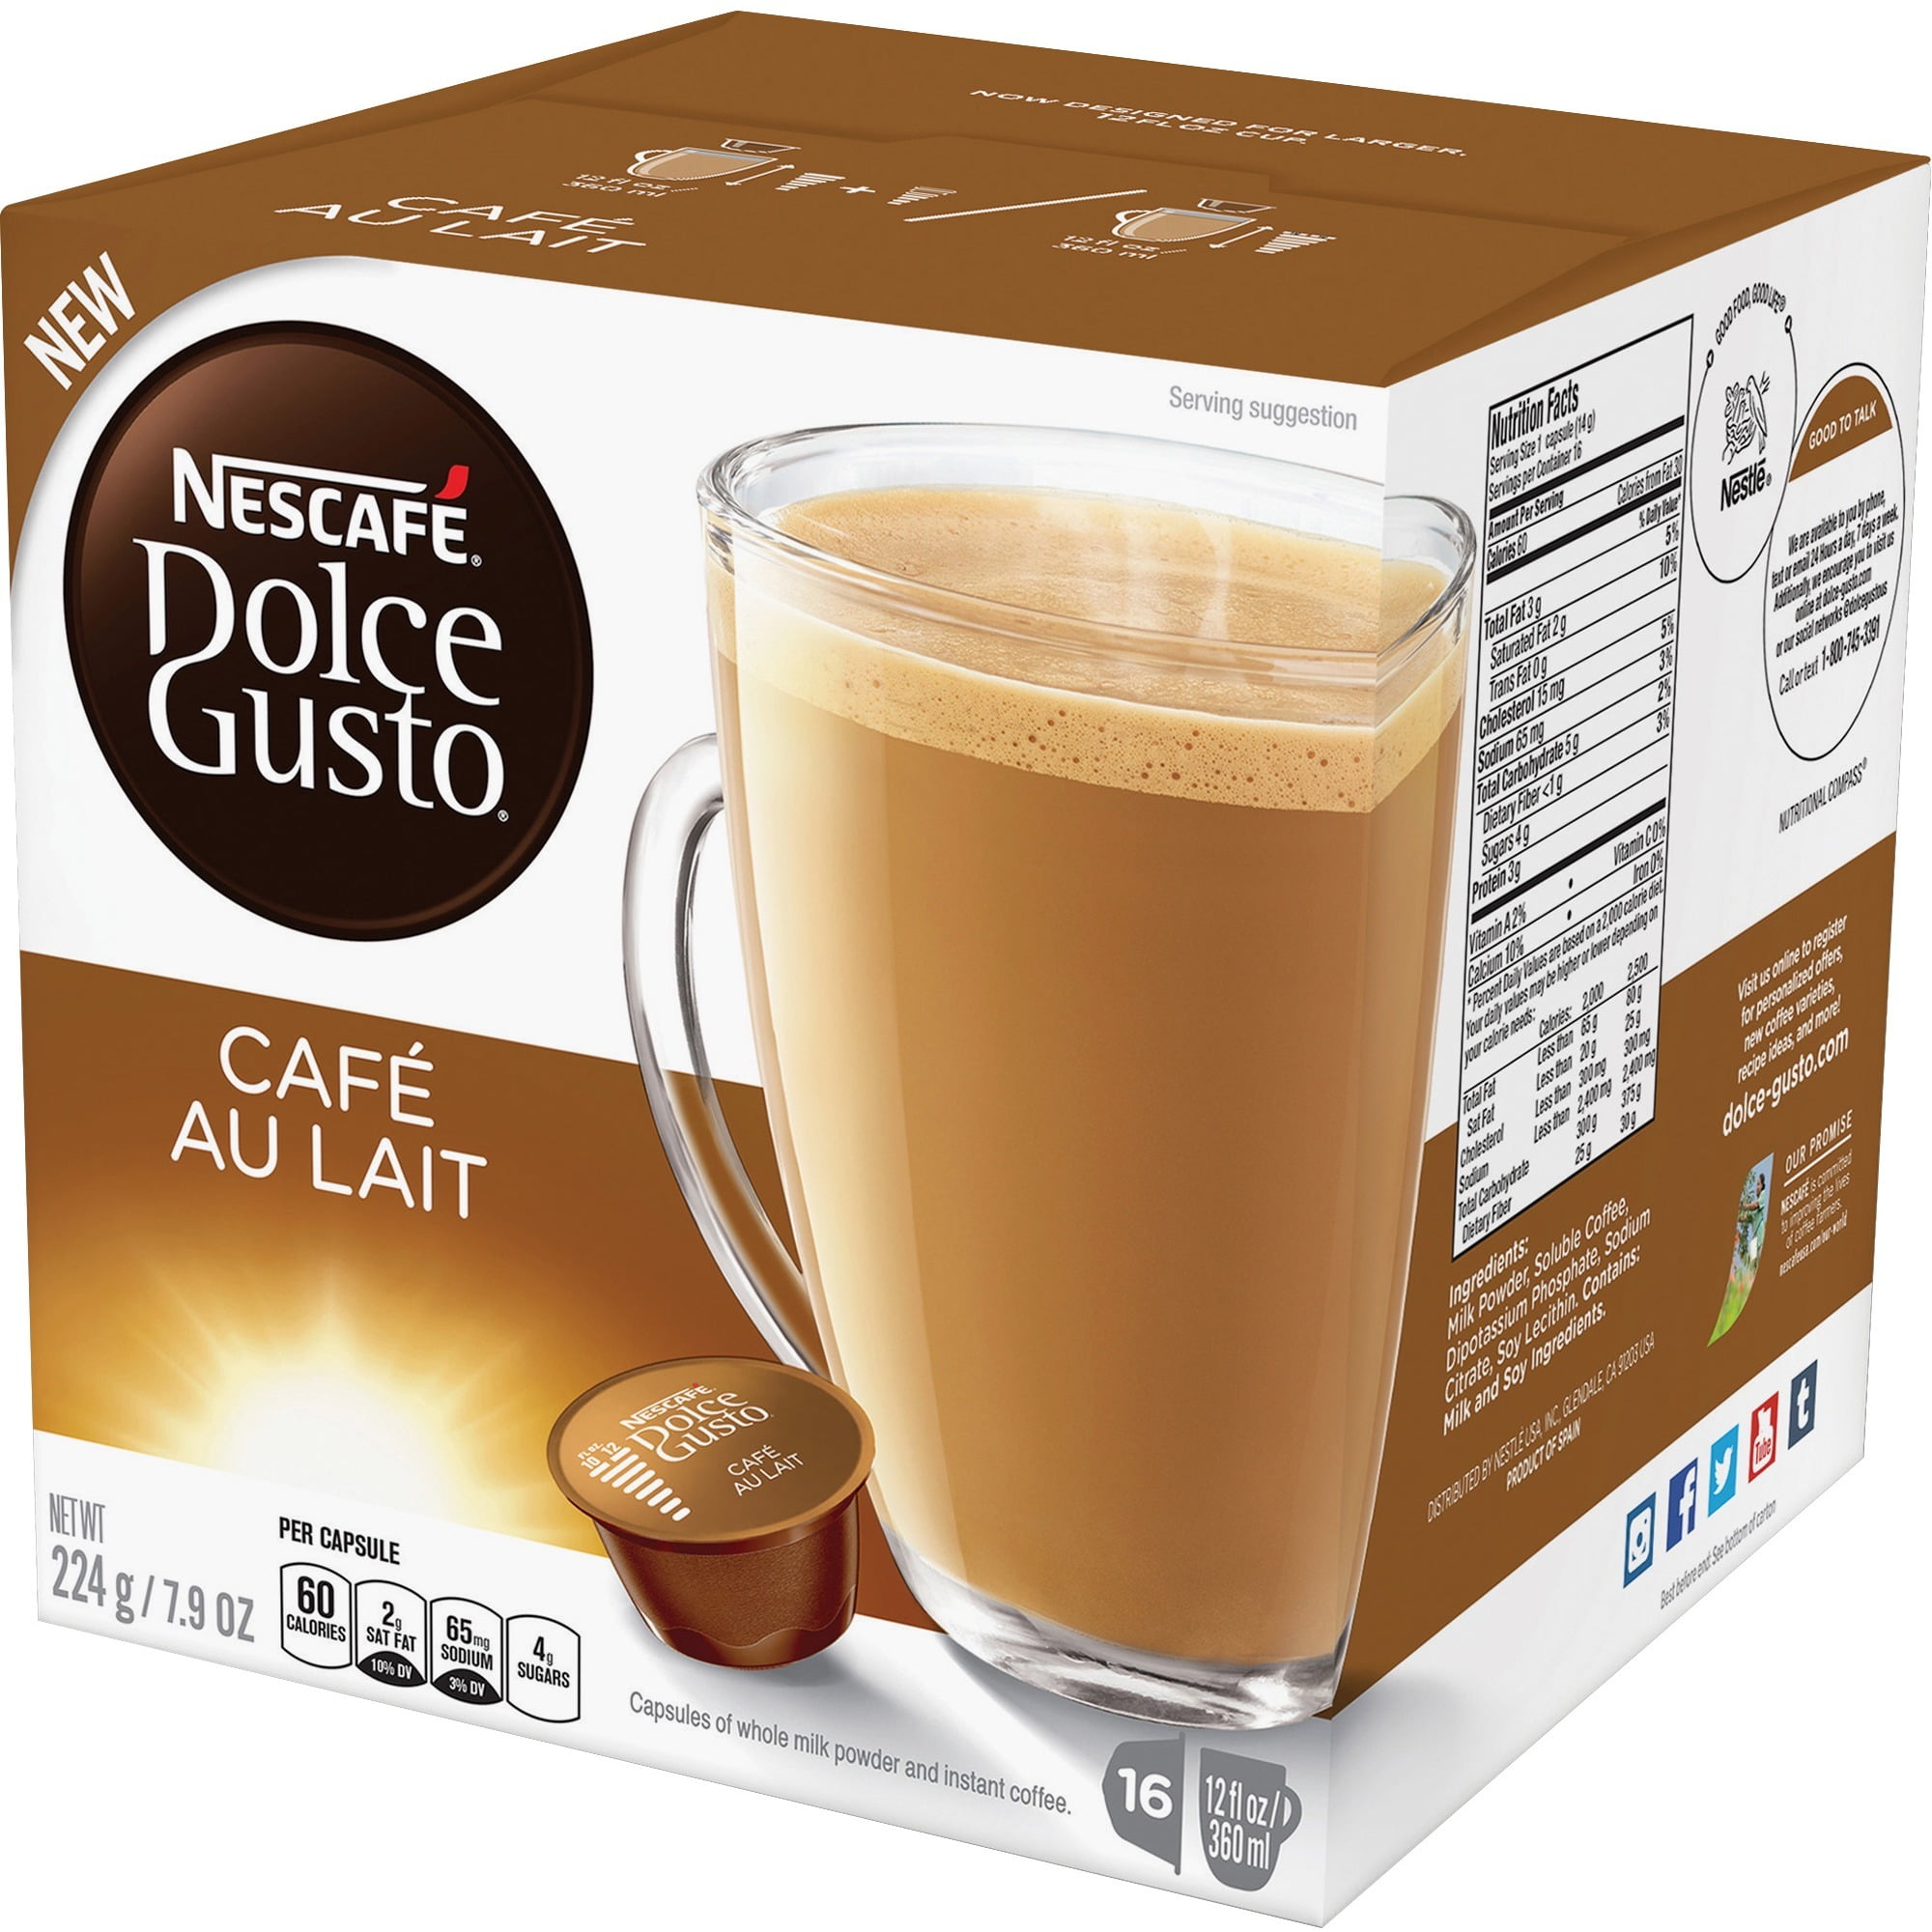 Nescafe Dolce Gusto, NES77321, Cafe Au Lait Coffee Capsules, 16 / Box ...